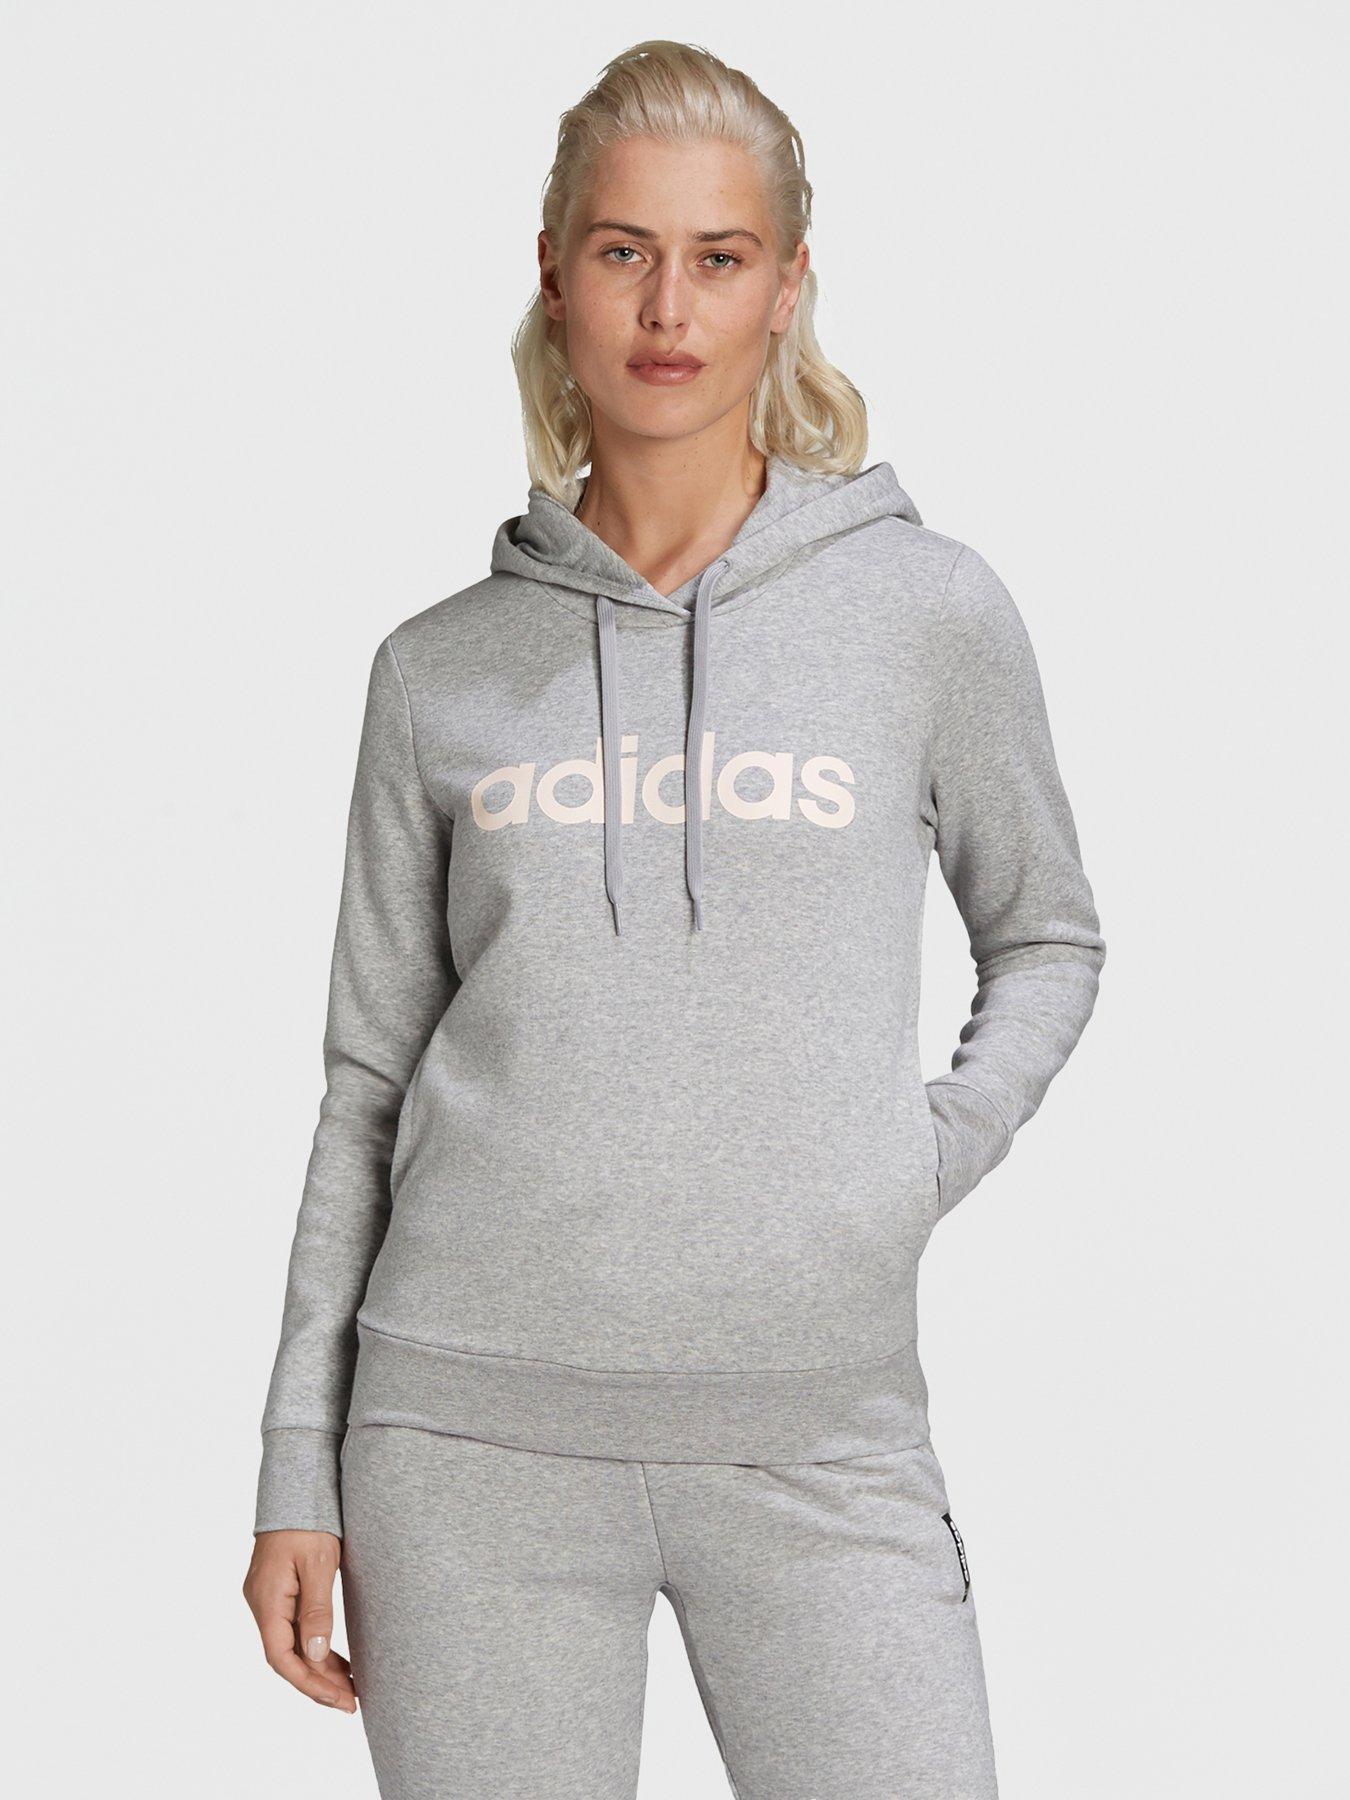 adidas originals linear fleece overhead hoodie